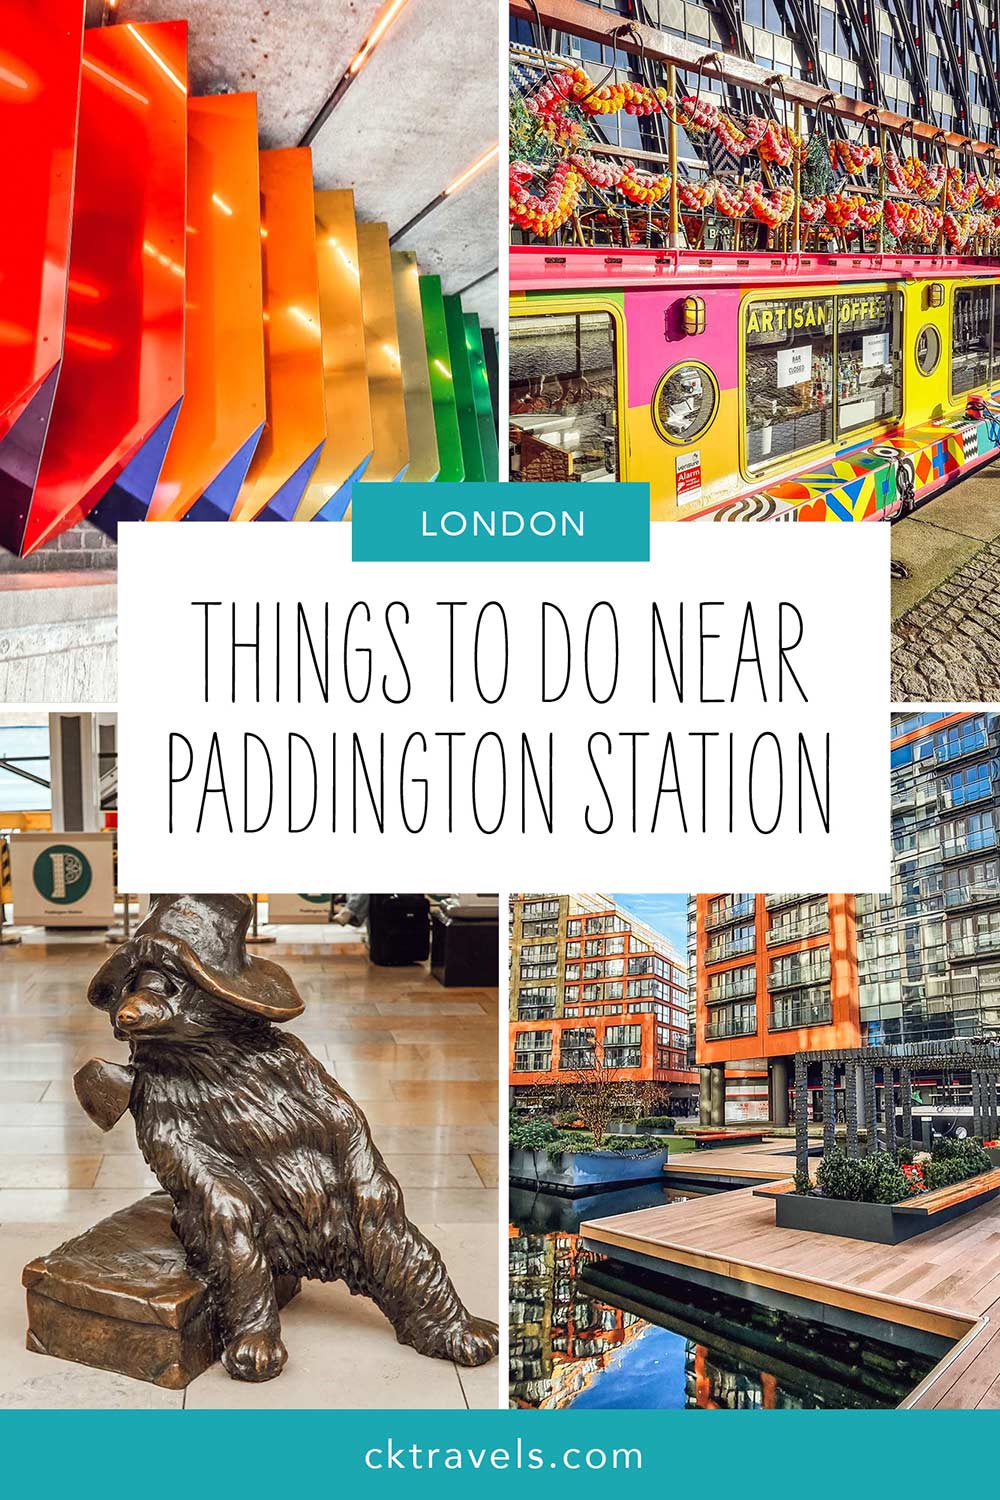 Things to do near Paddington Station